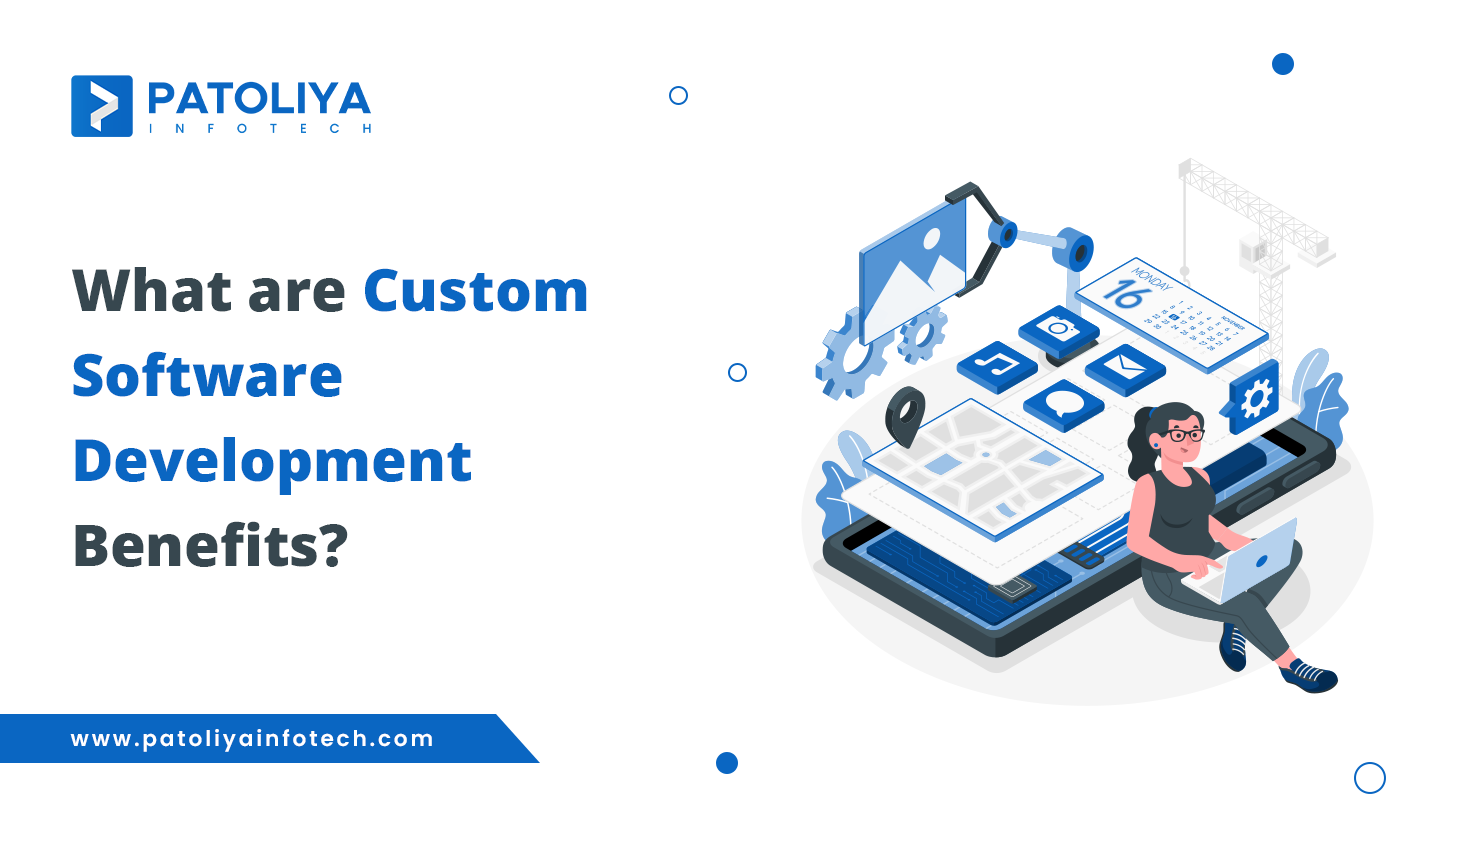 What are Custom Software Development Benefits?